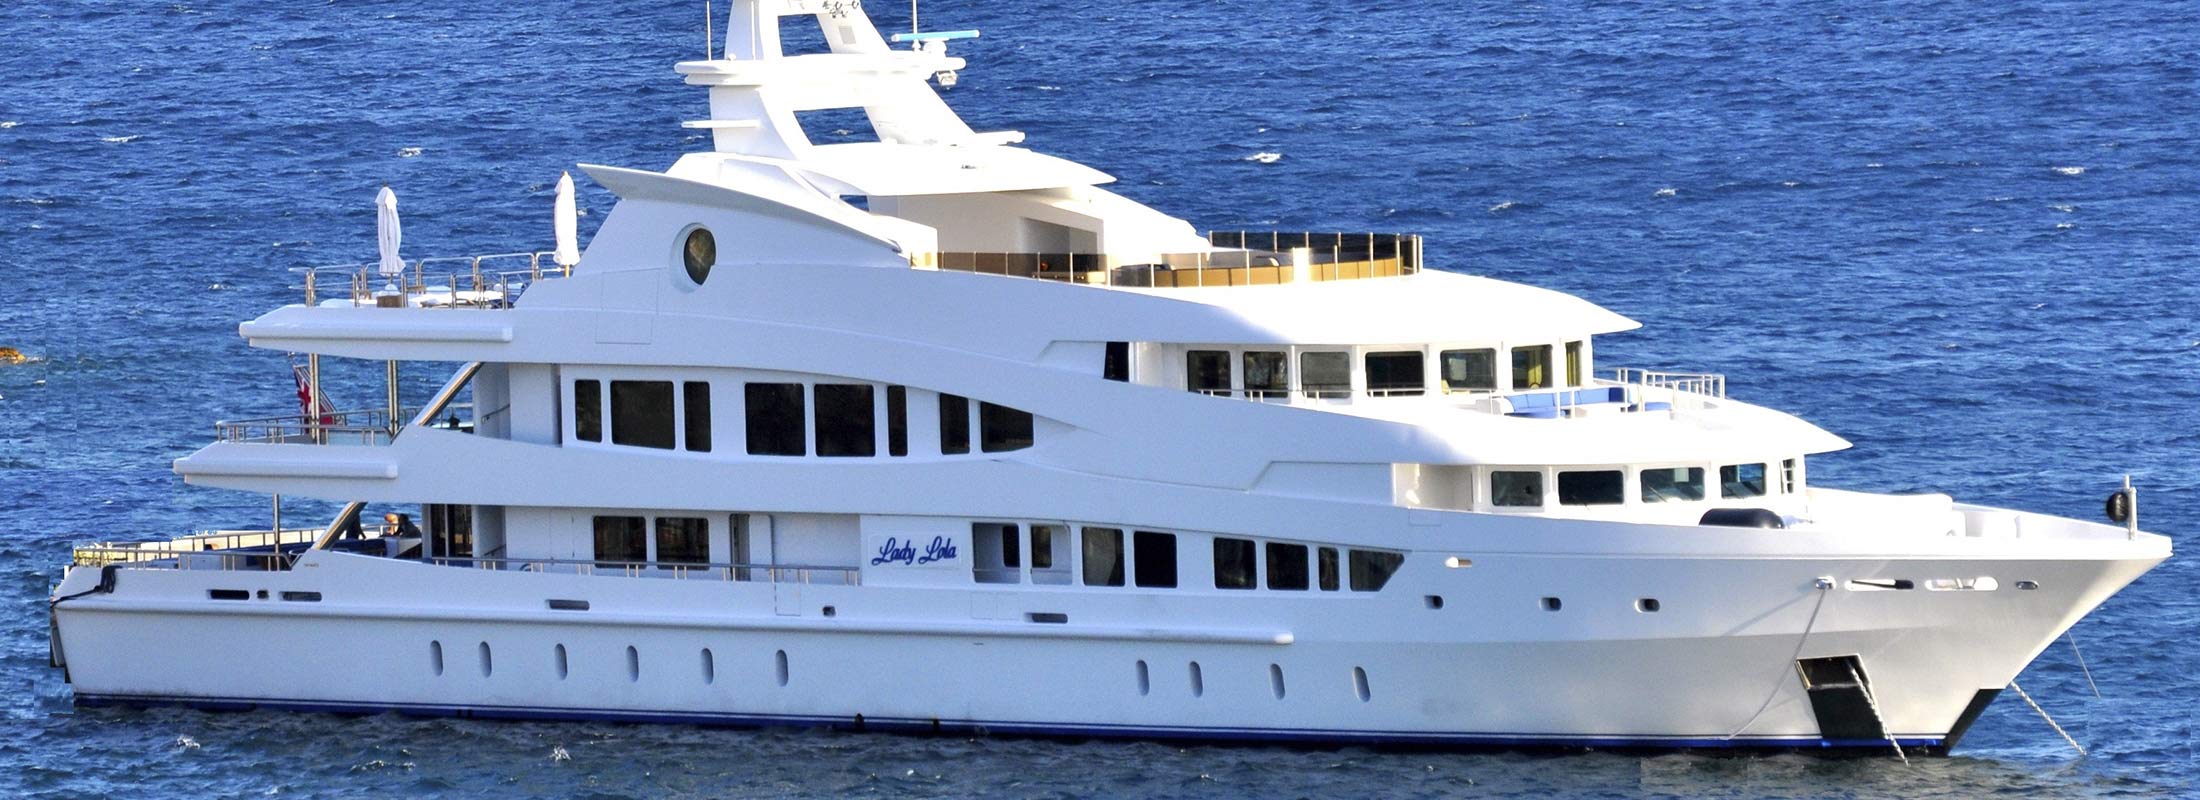 Lucky Lady luxury yacht charter Motor Yacht for Charter Caribbean Sea slider 1